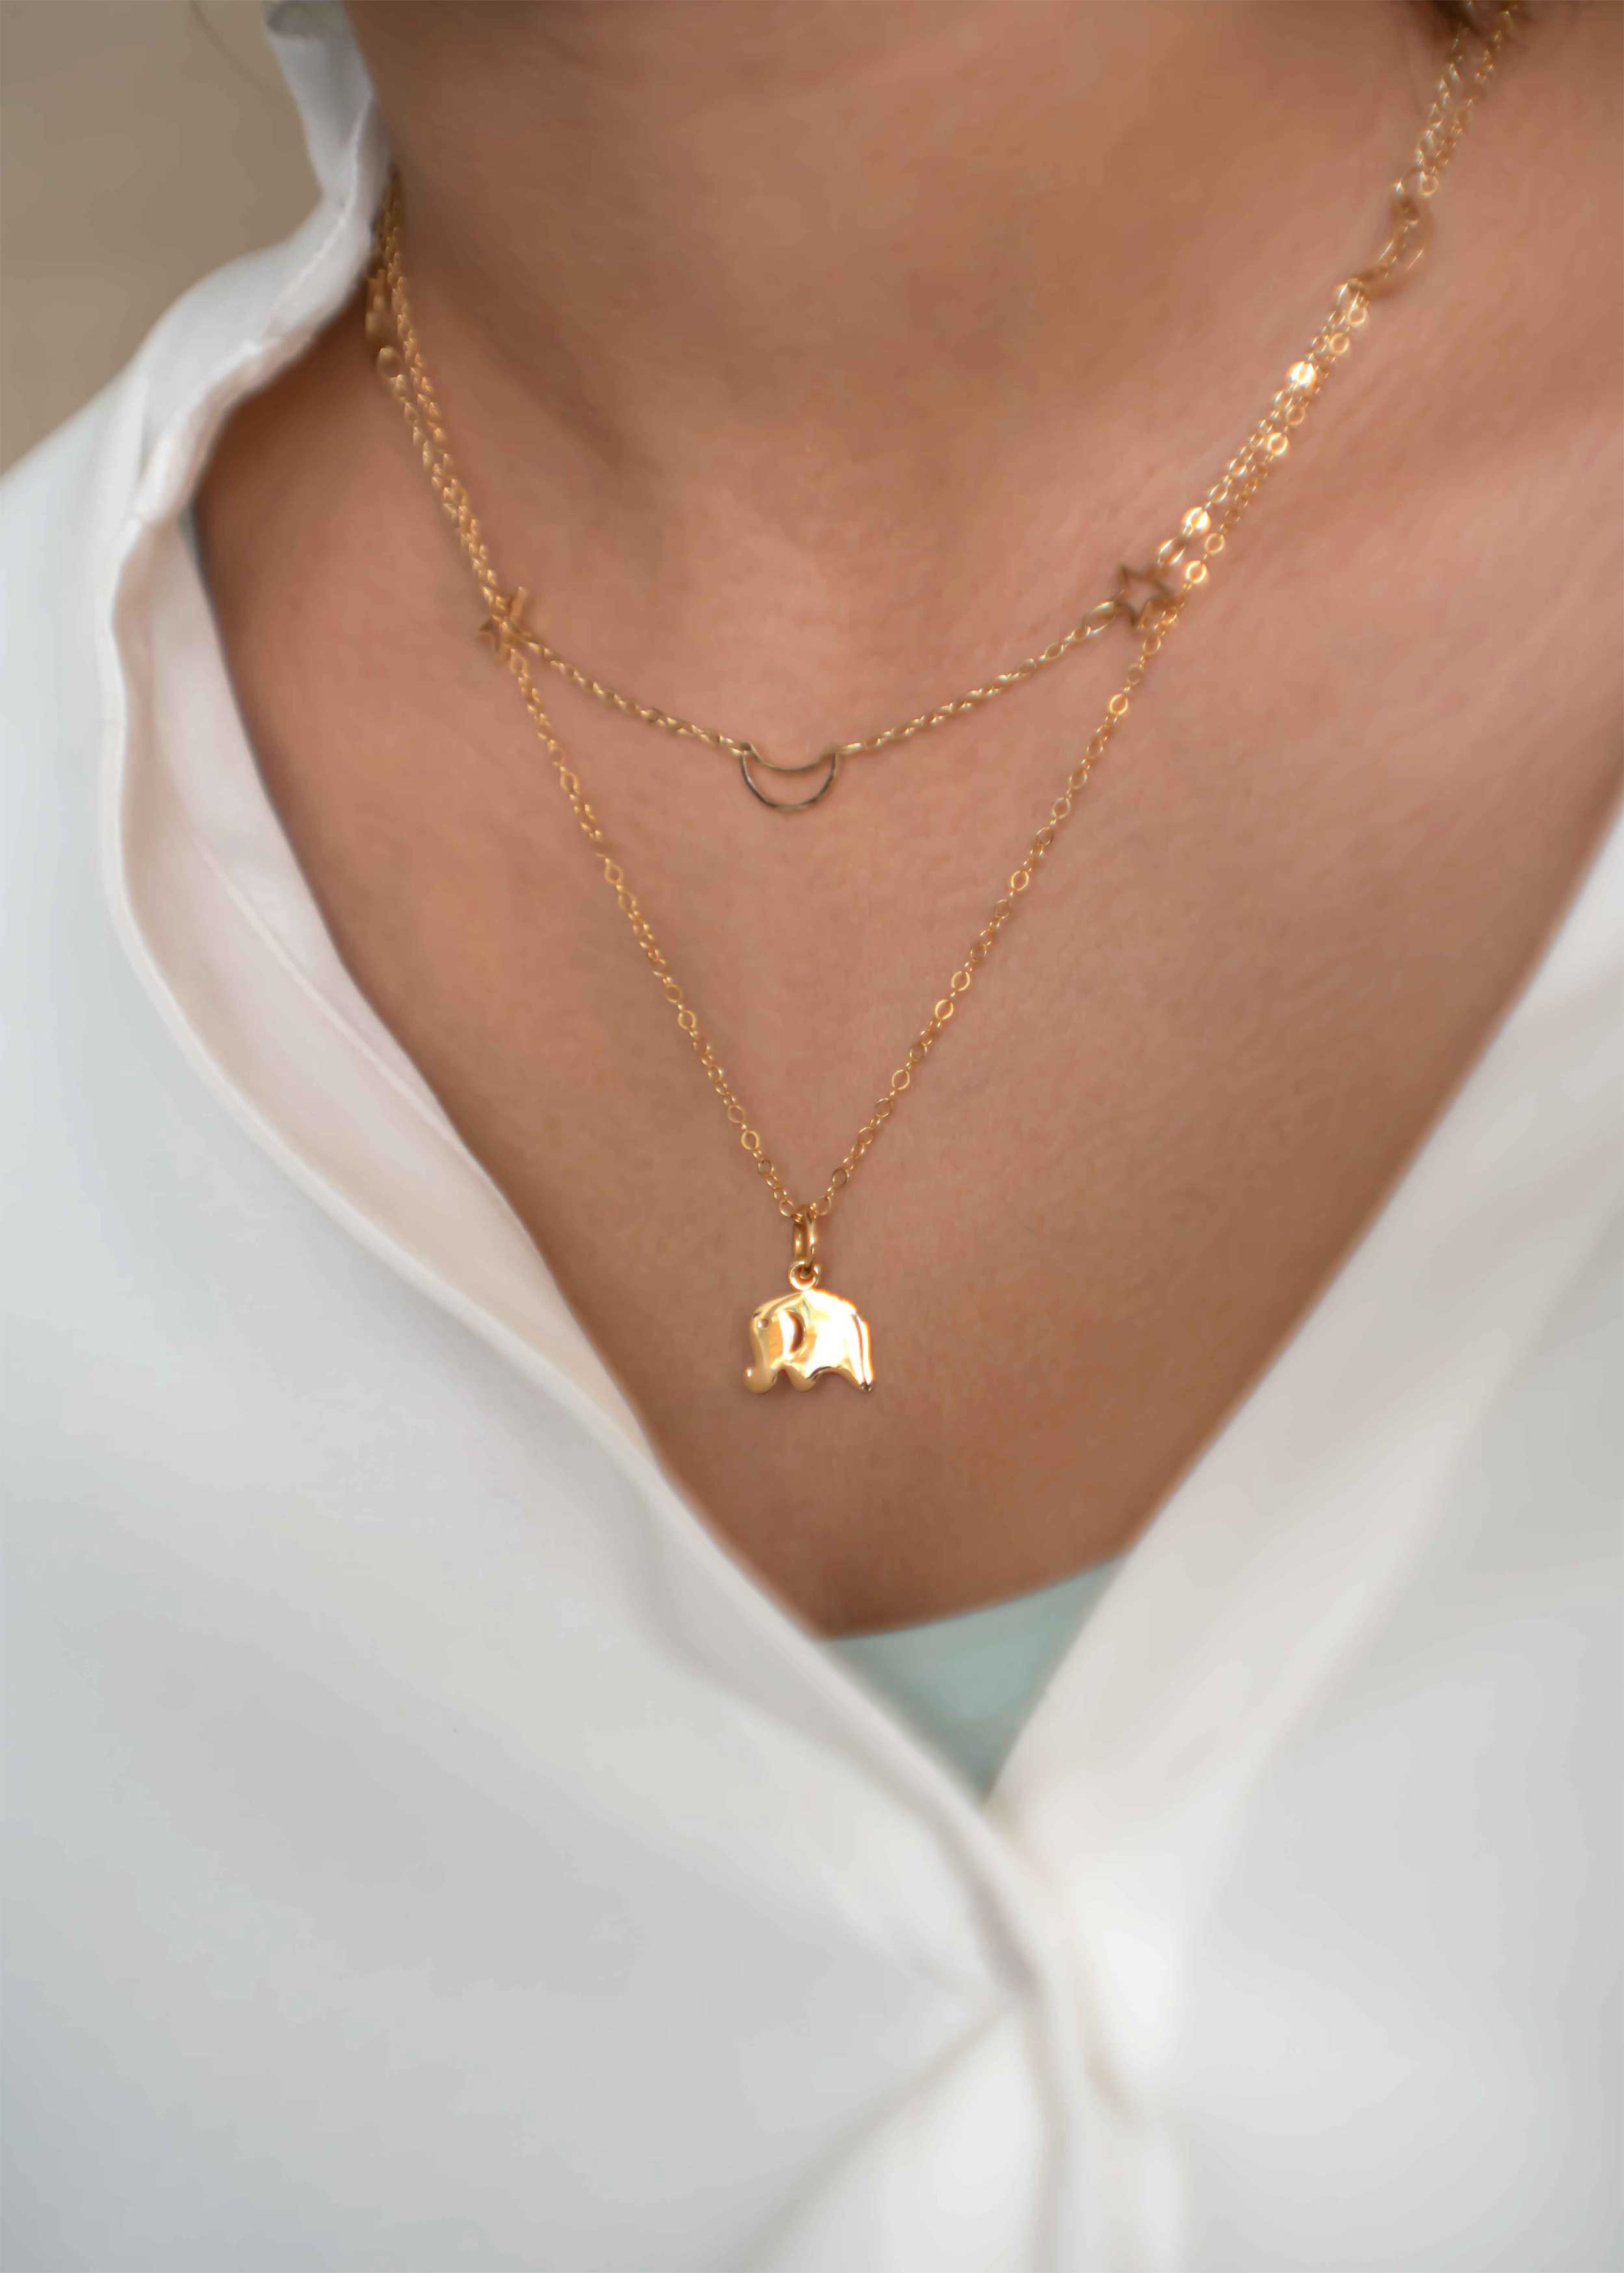 Elephant charm necklace9